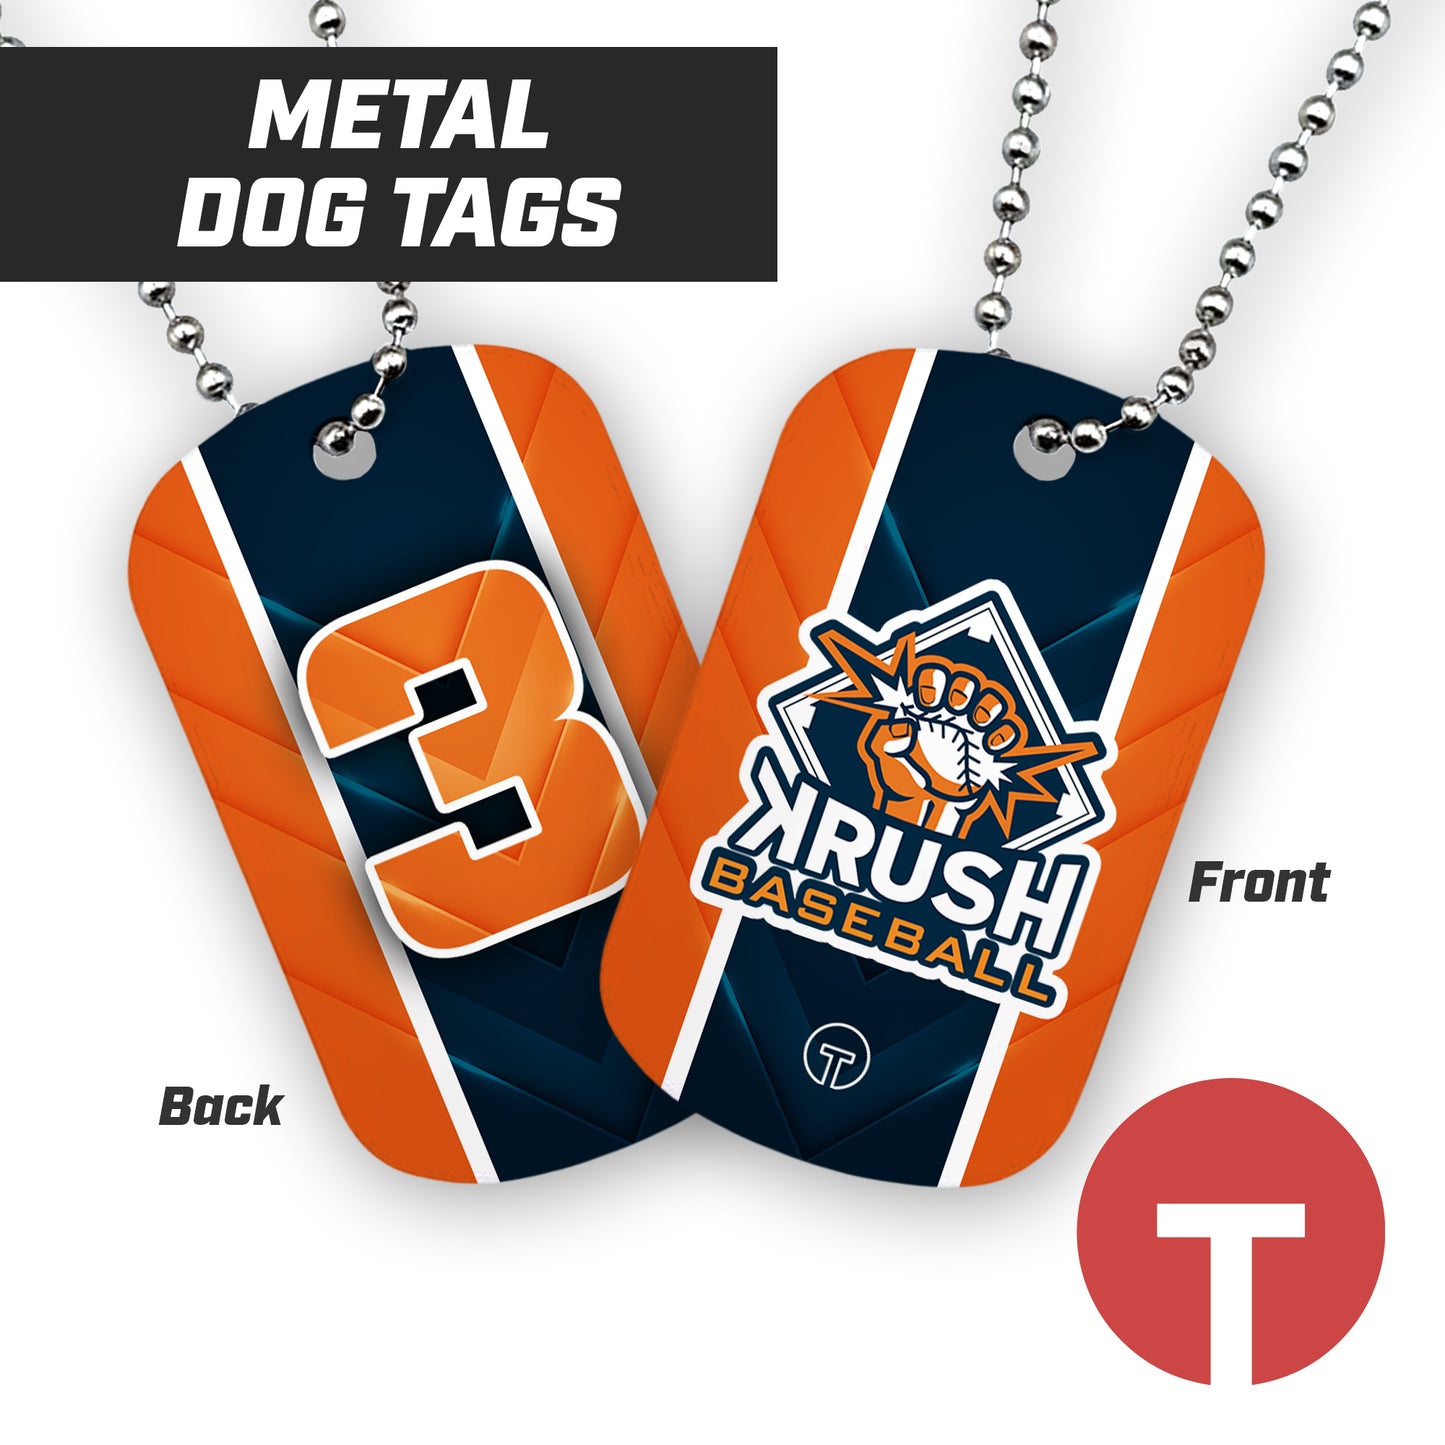 Krush Baseball - Double Sided Dog Tags